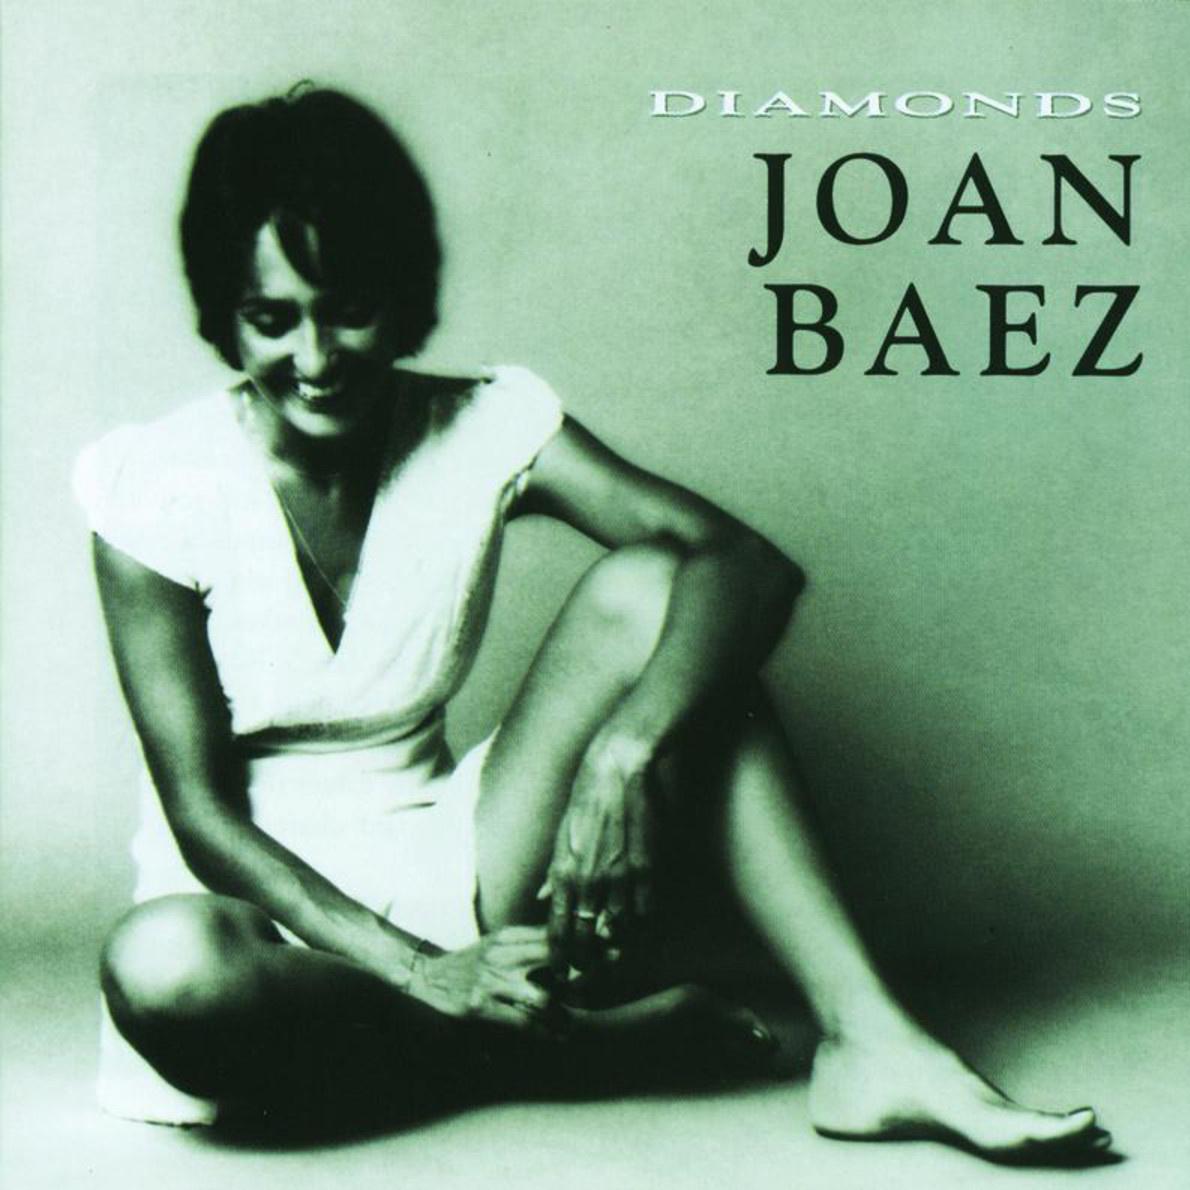 Joan Baez - (Ain't Gonna Let Nobody) Turn Me Around (Live)